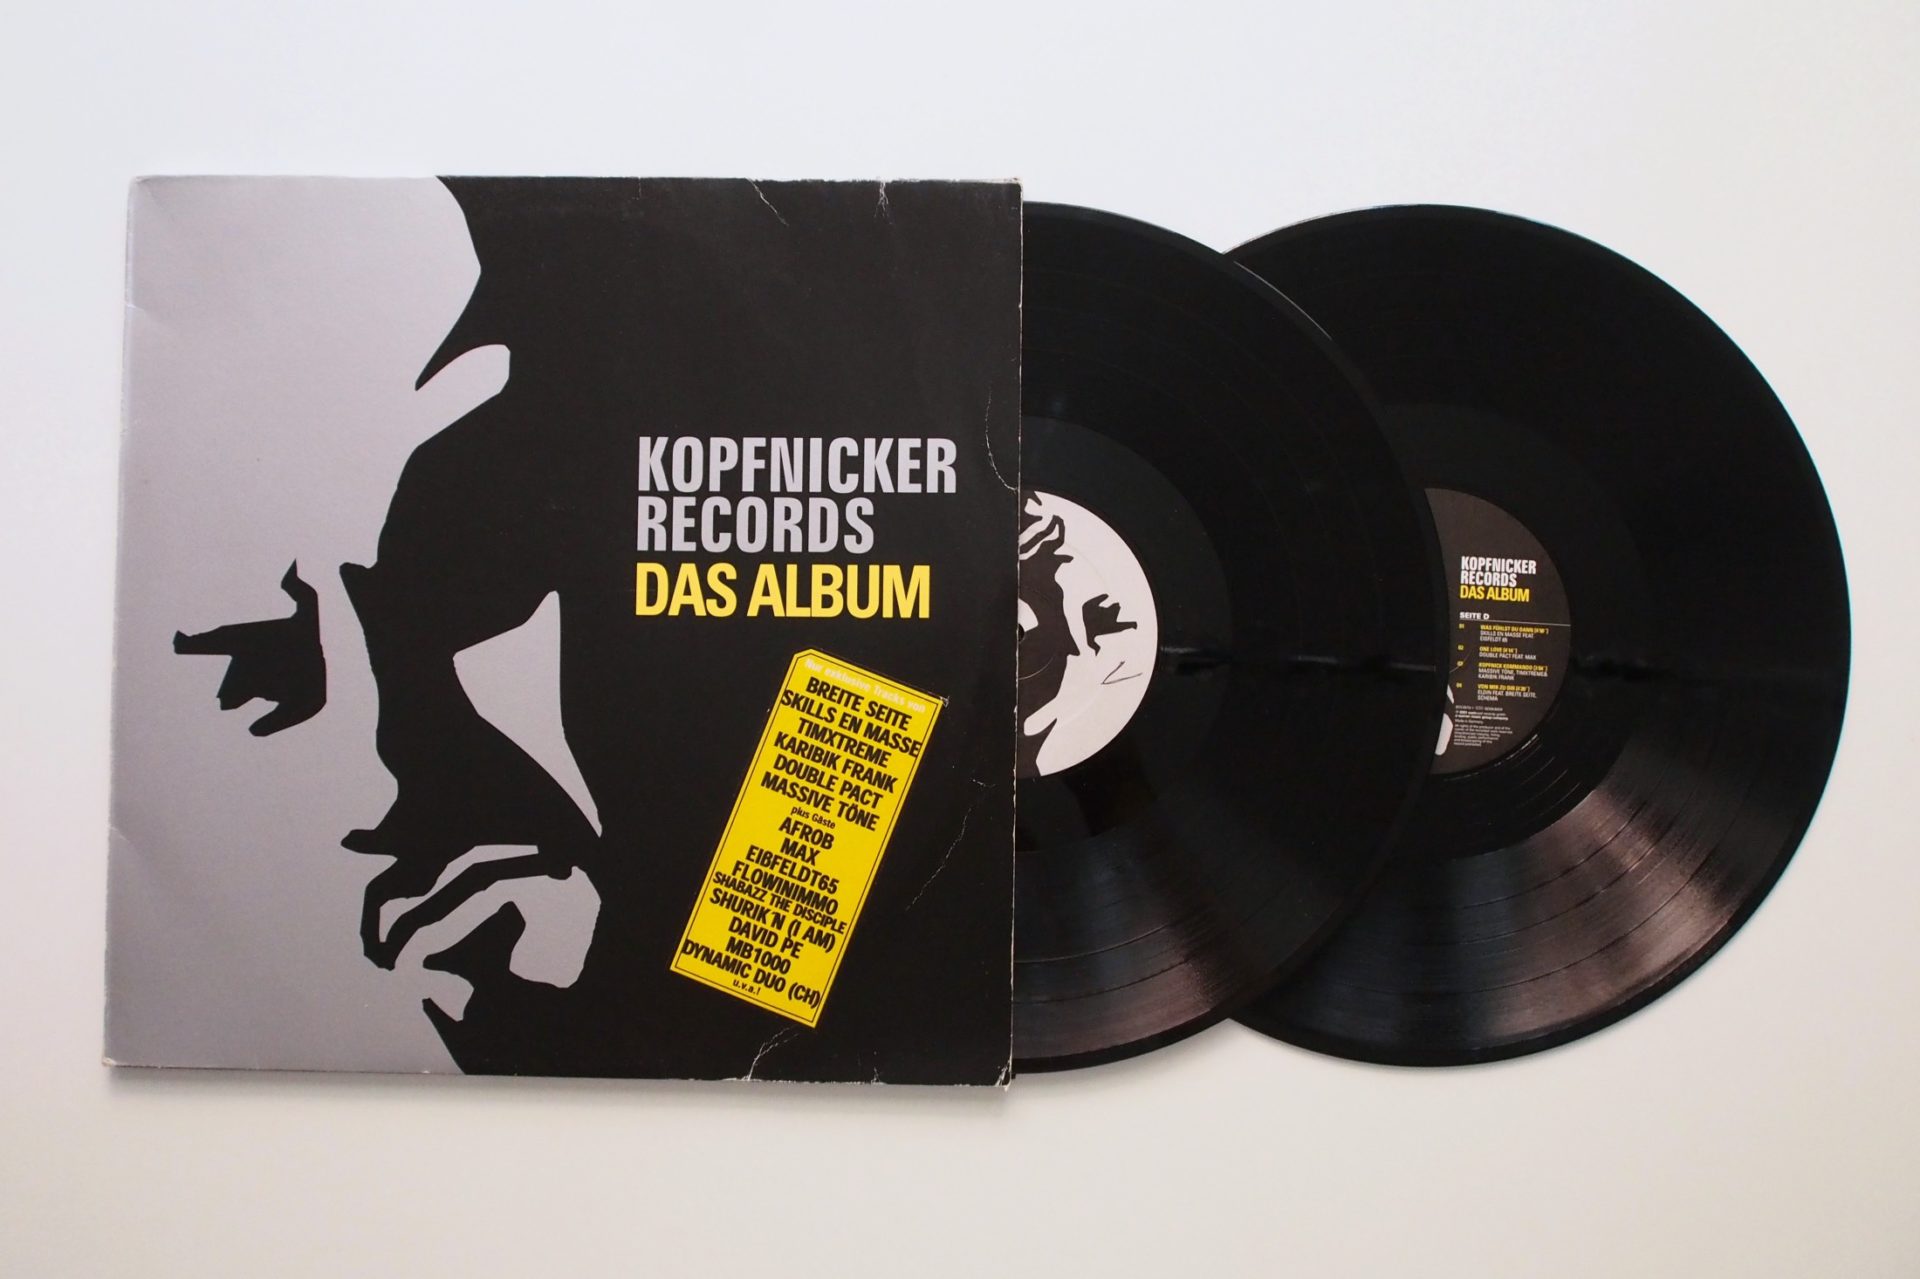 Kopfnicker Records